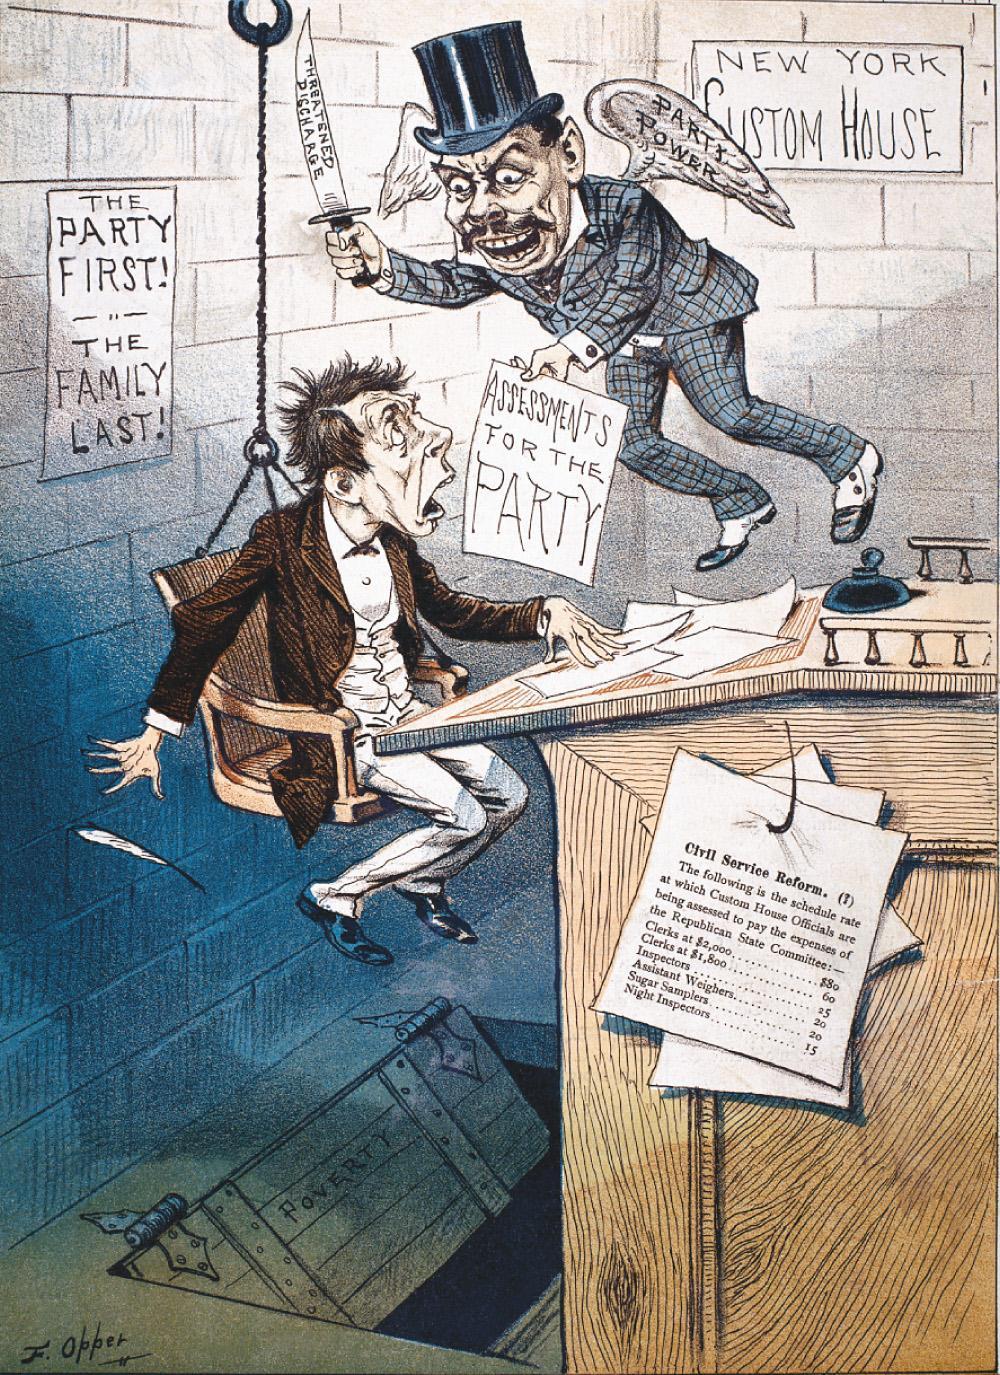 In this 1881 cartoon, the evil spirit of